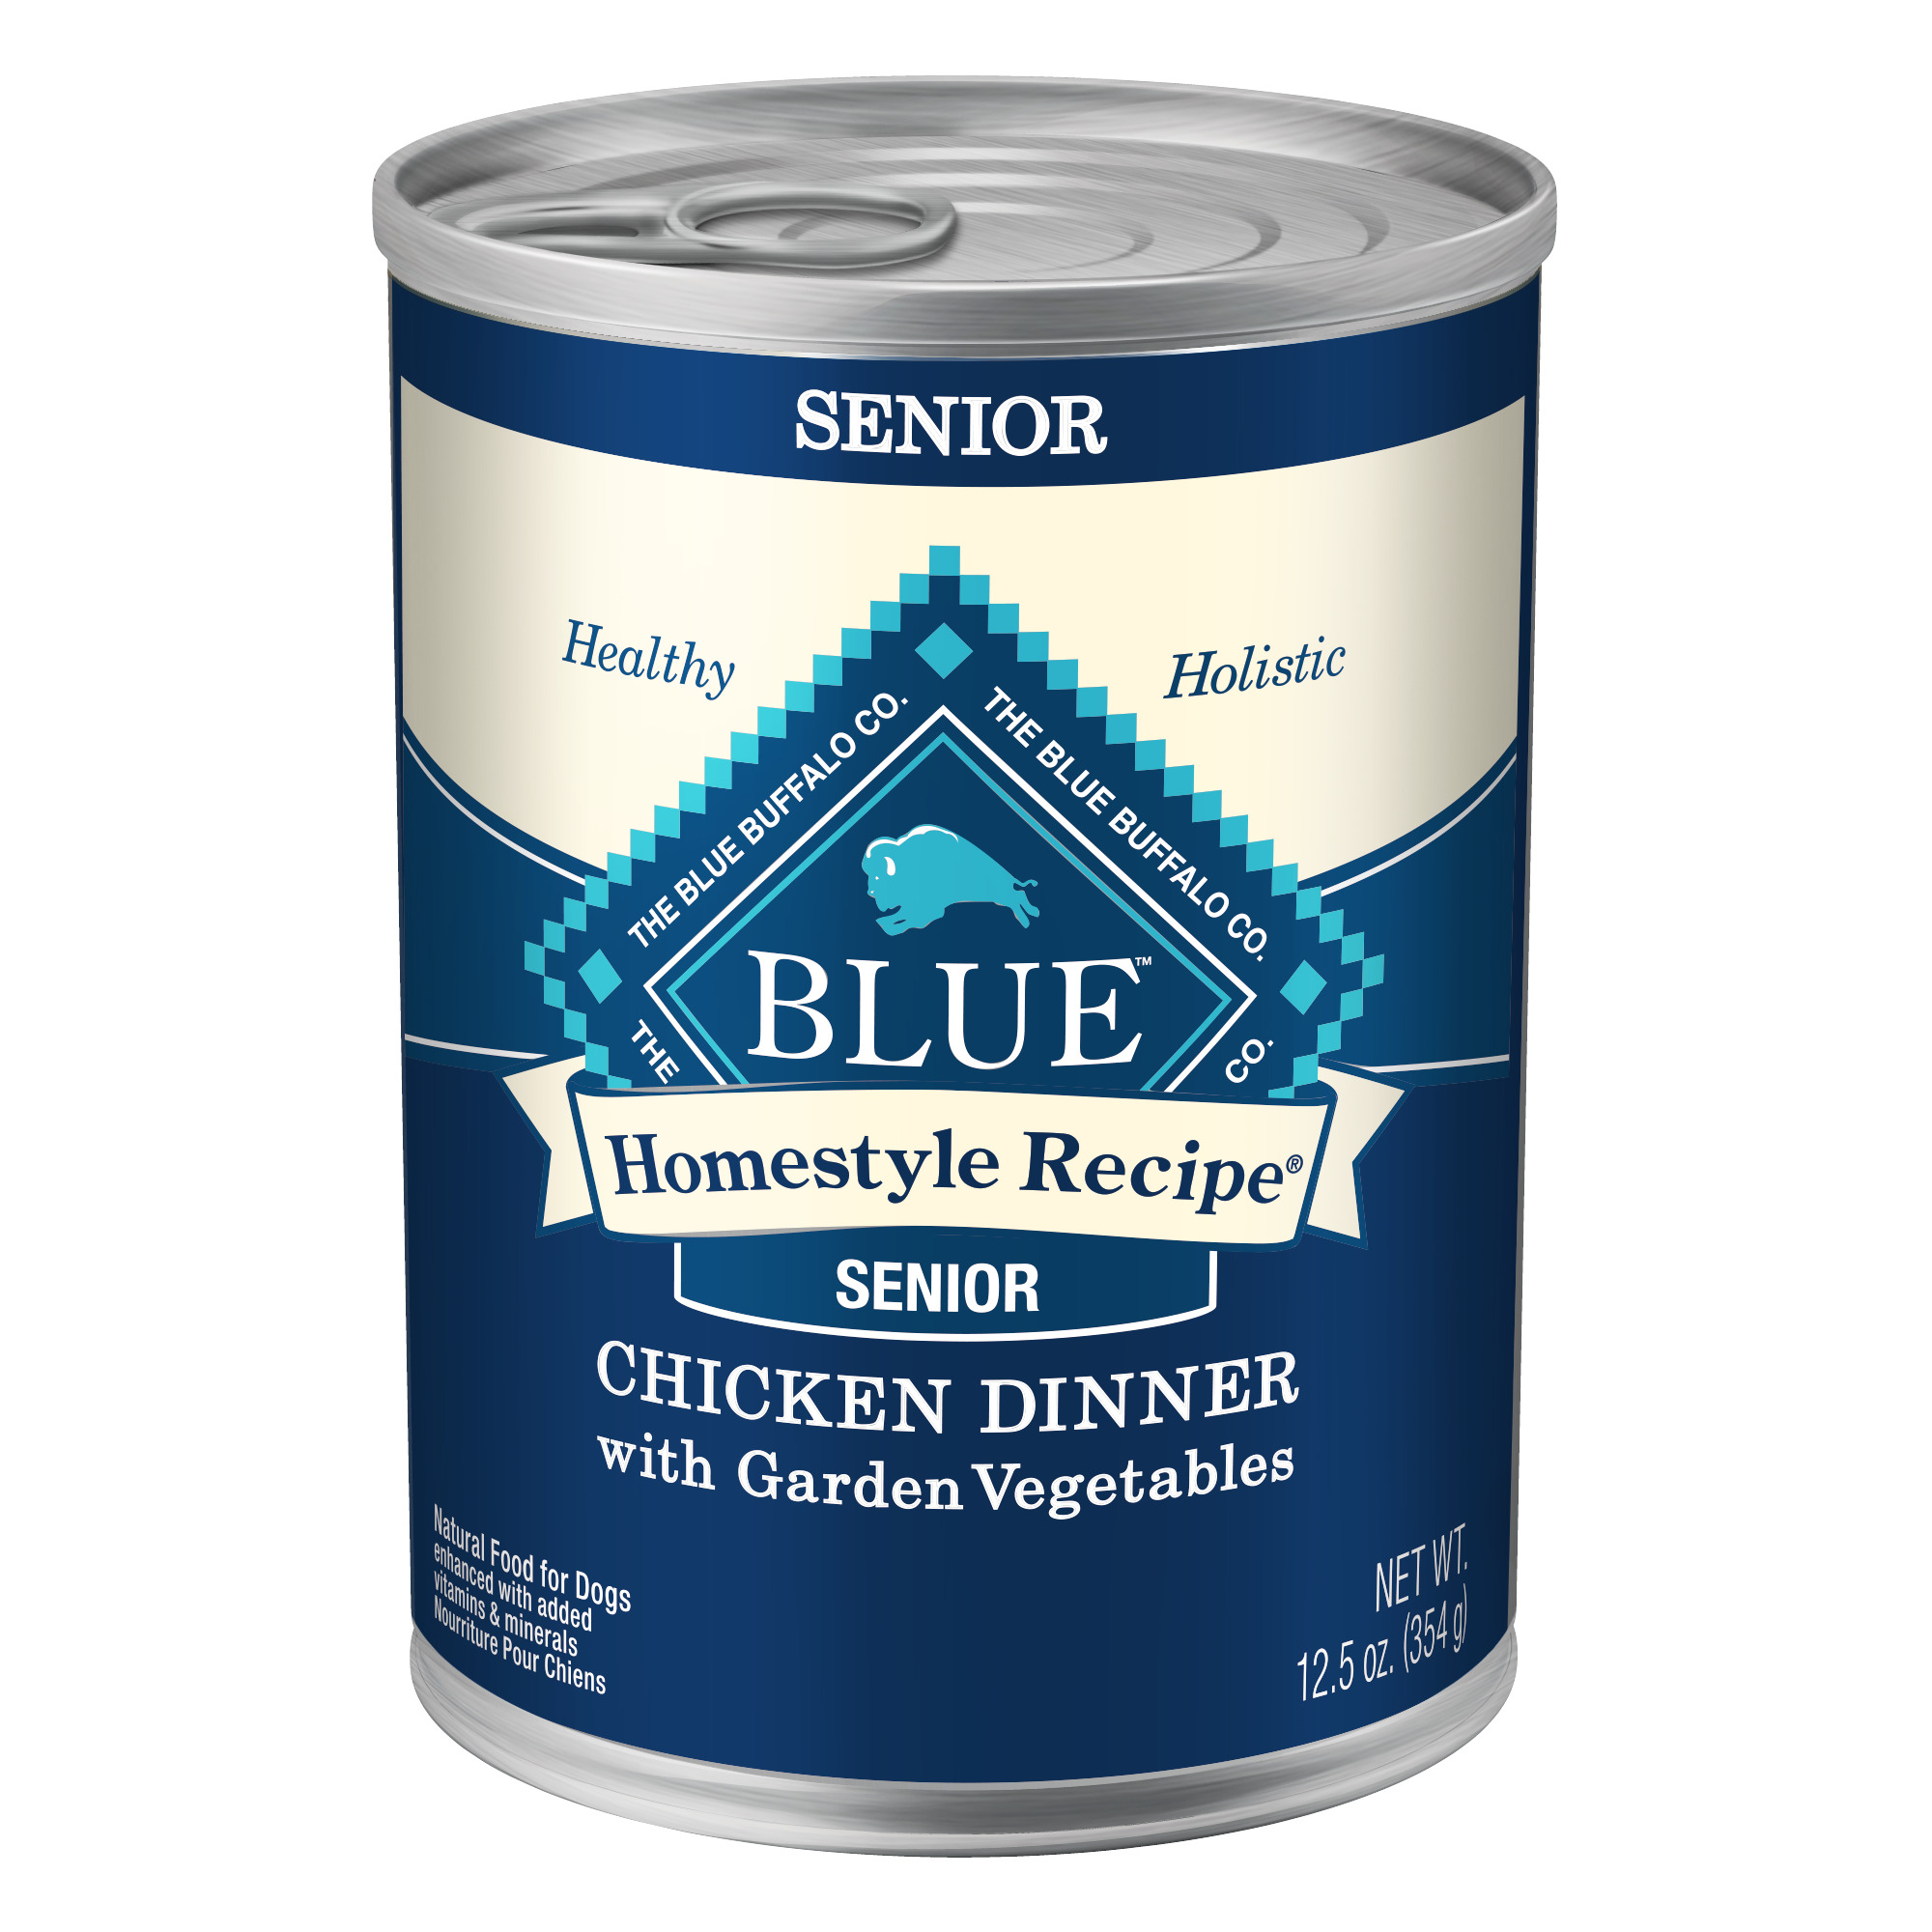 BLUE Homestyle Recipe Chicken Dinner with Garden Vegetables for Senior Dogs, 12.5oz